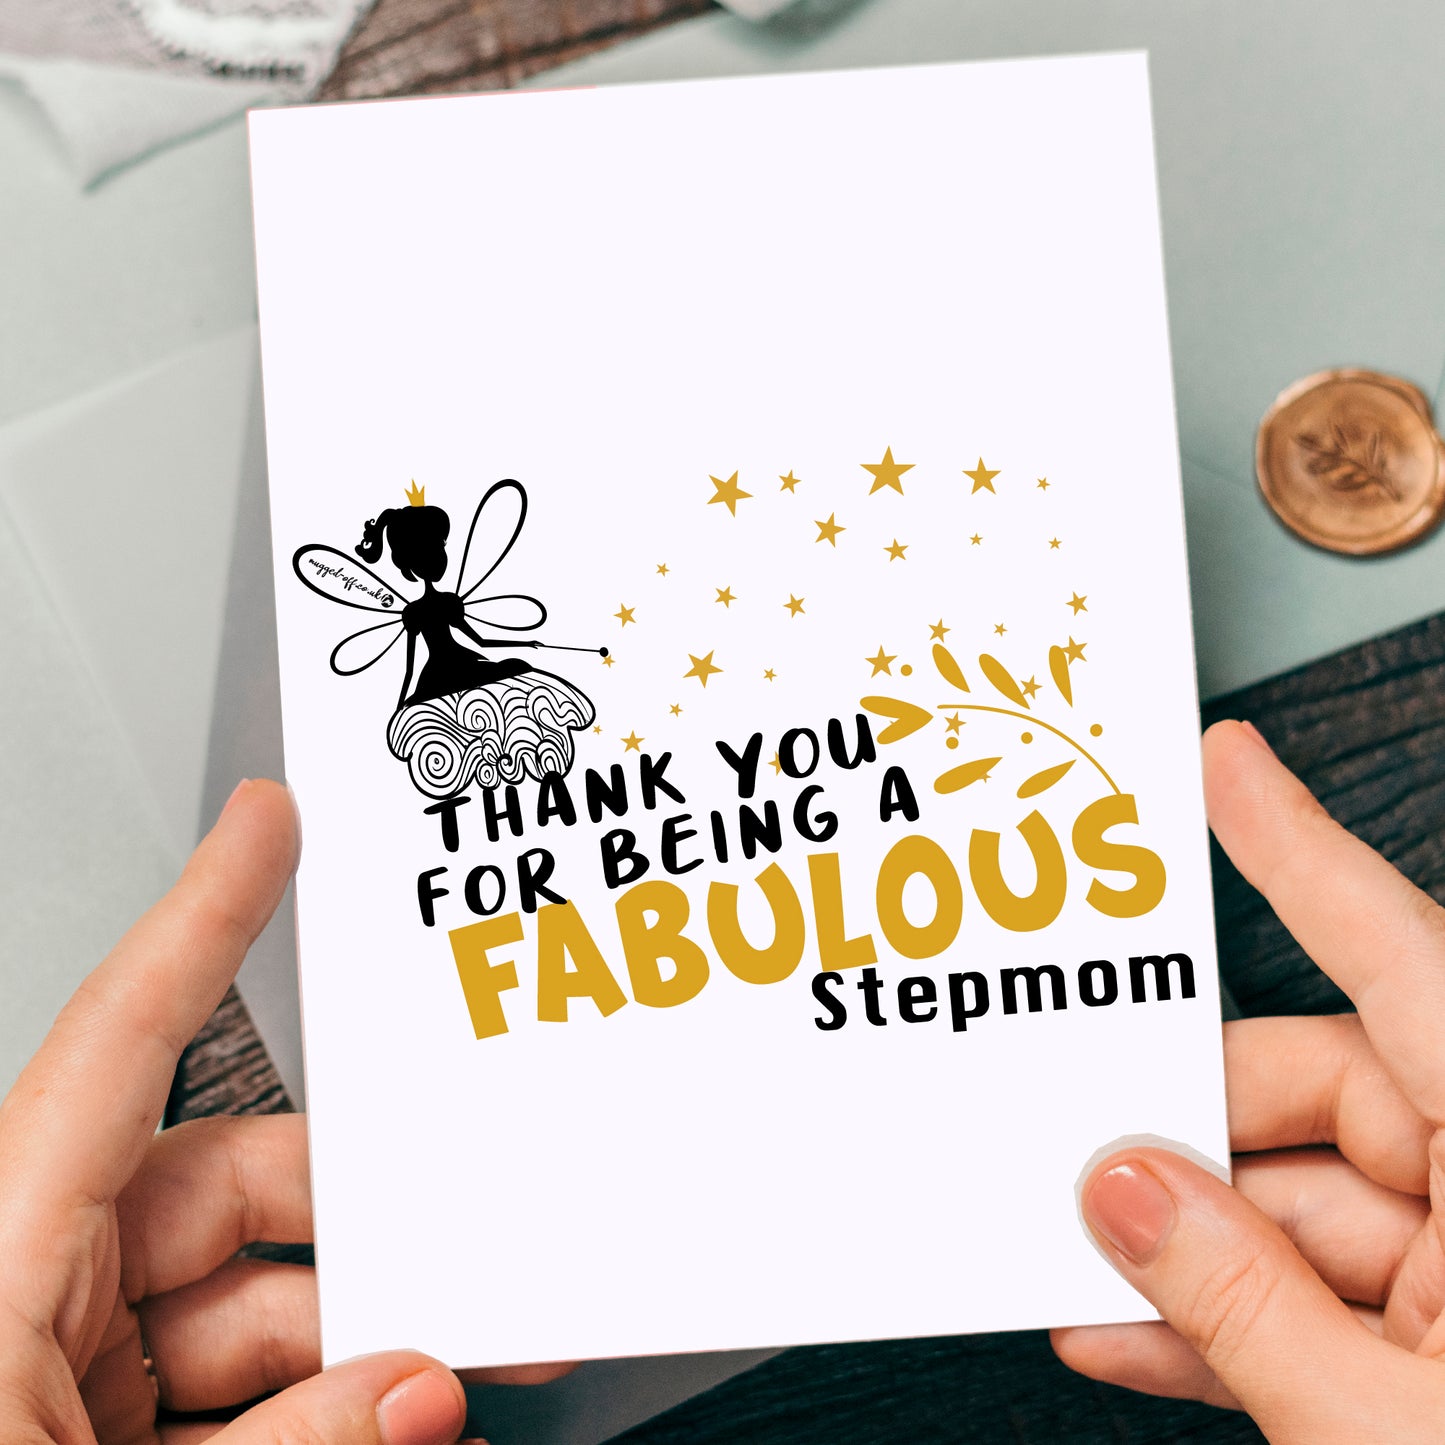 Stepmom Mother's Day Greetings Card, Birthday, Any Occasion, Blank Inside, Fabulous Stepmom